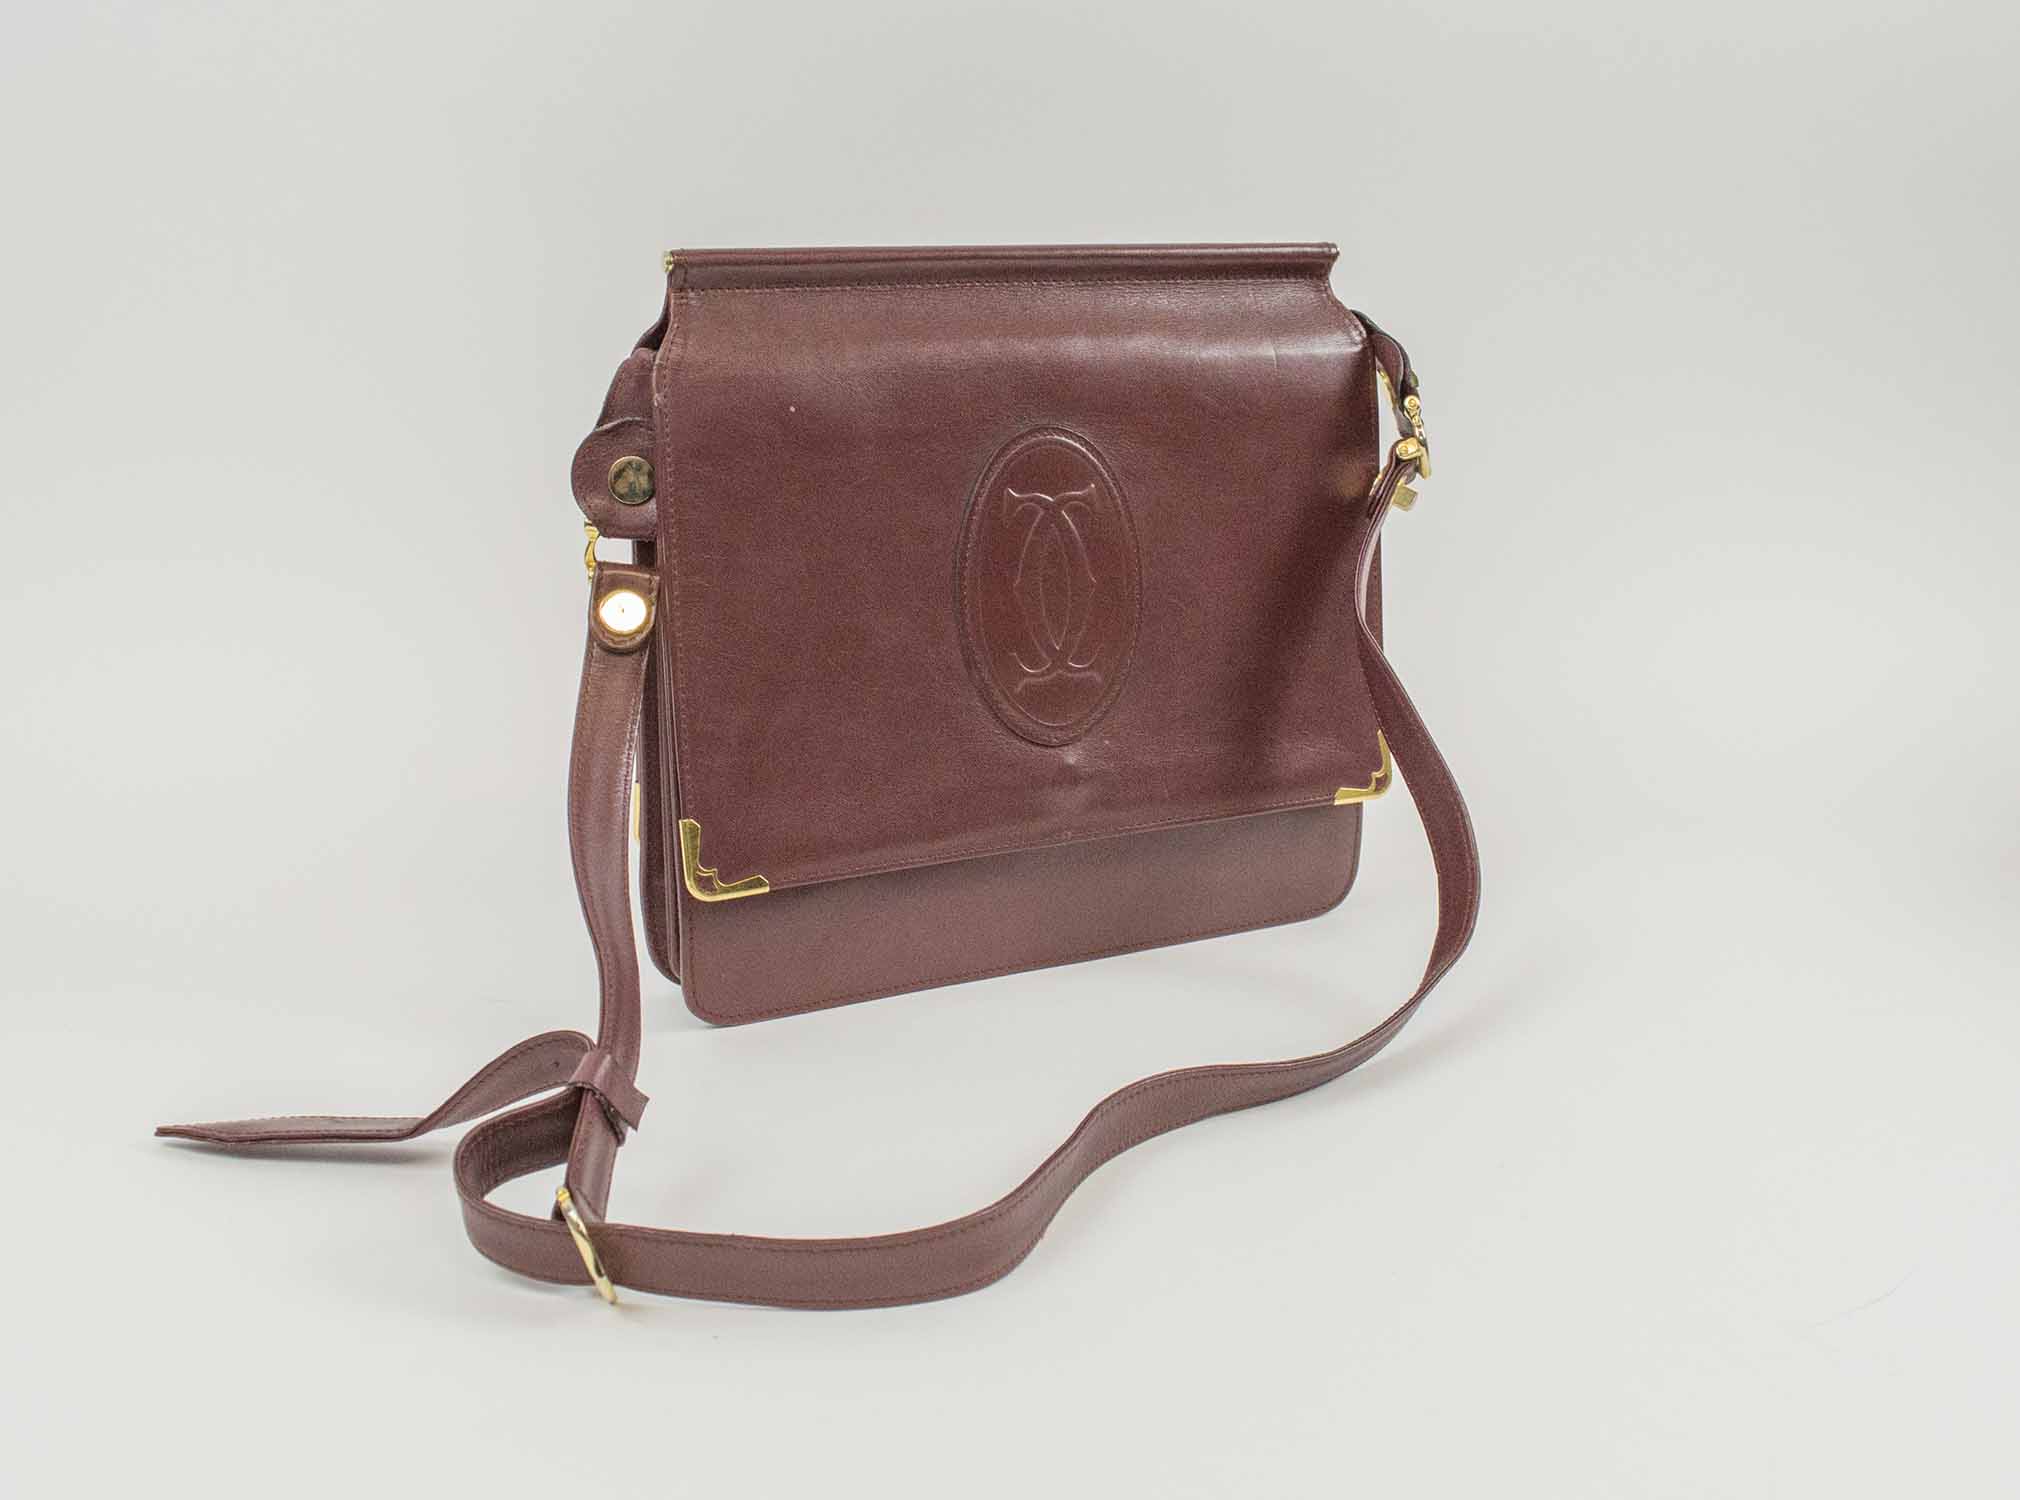 Cartier Vintage Handbag Burgundy Leather With Iconic Logo At The Front Front Flap Closure Gold Tone Hardware Adjustable Shoulder Strap Back Pocket Matching Leather Lining 25cm X 24cm H X 5cm